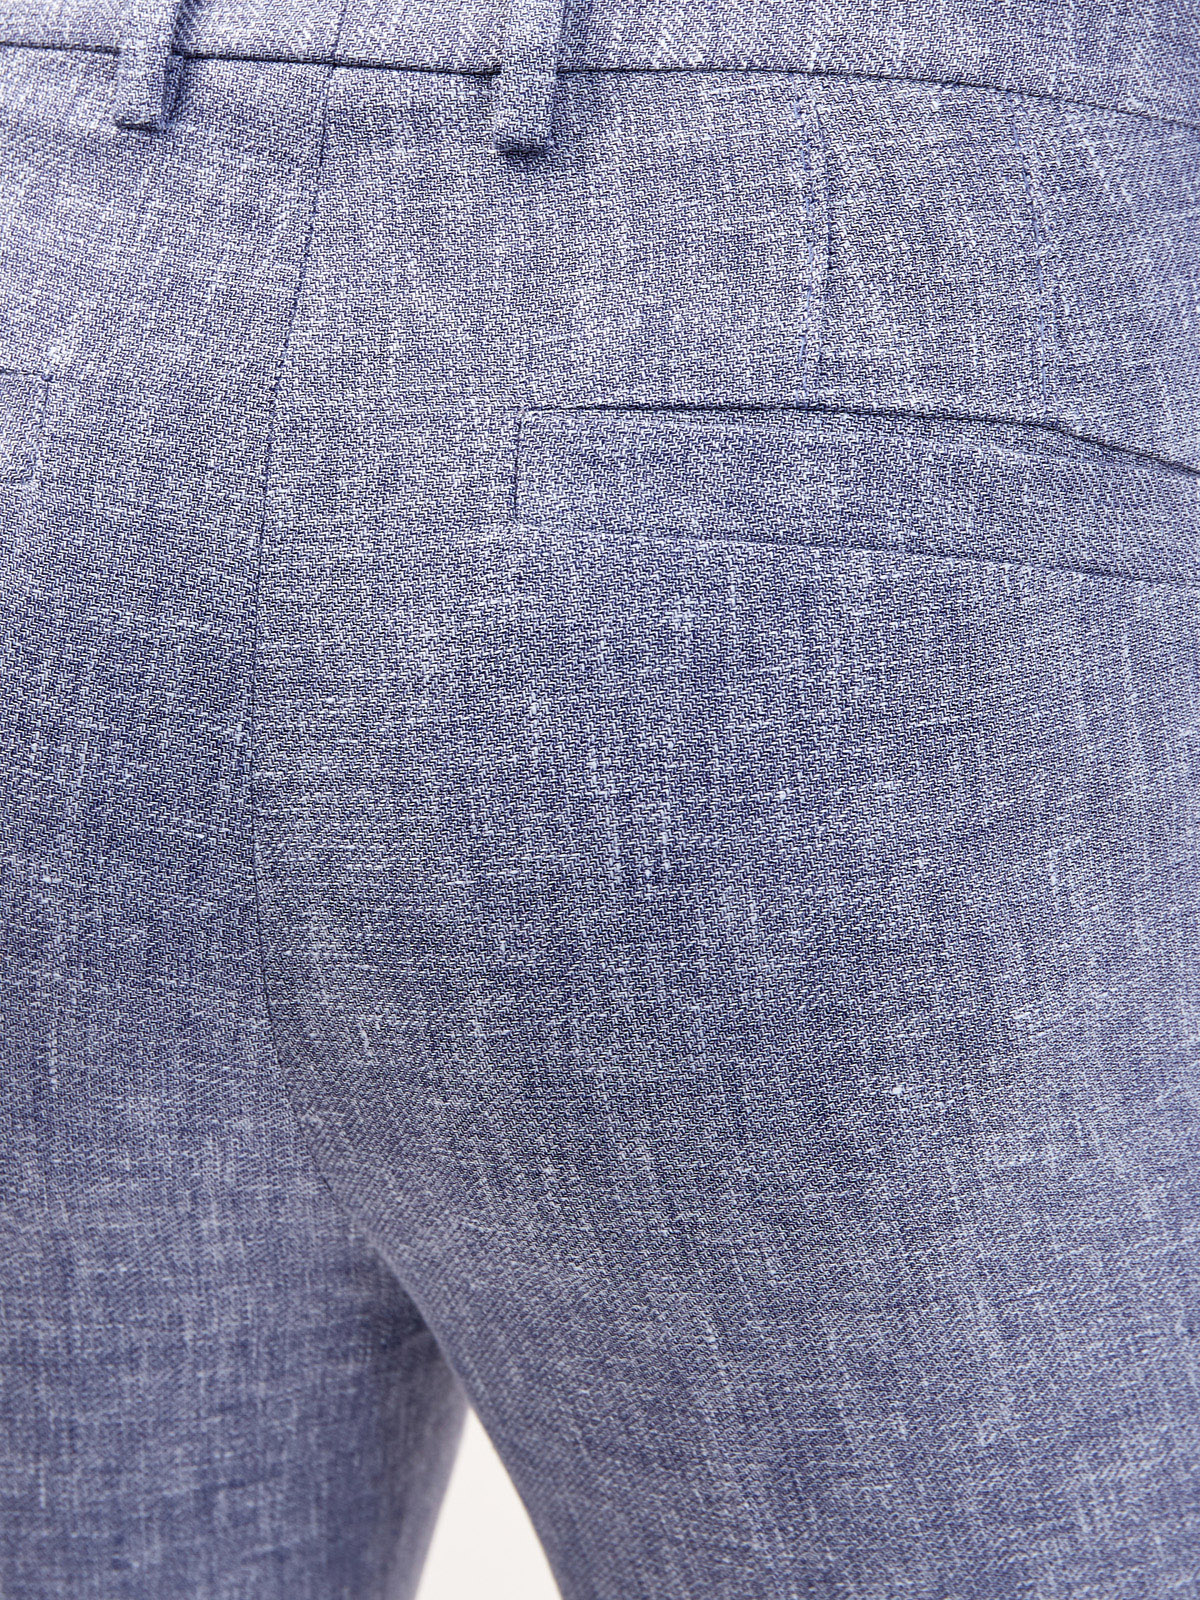 Брюки-чинос из шерсти и льна в стиле sprezzatura BRUNELLO CUCINELLI, цвет серый, размер 46 - фото 6